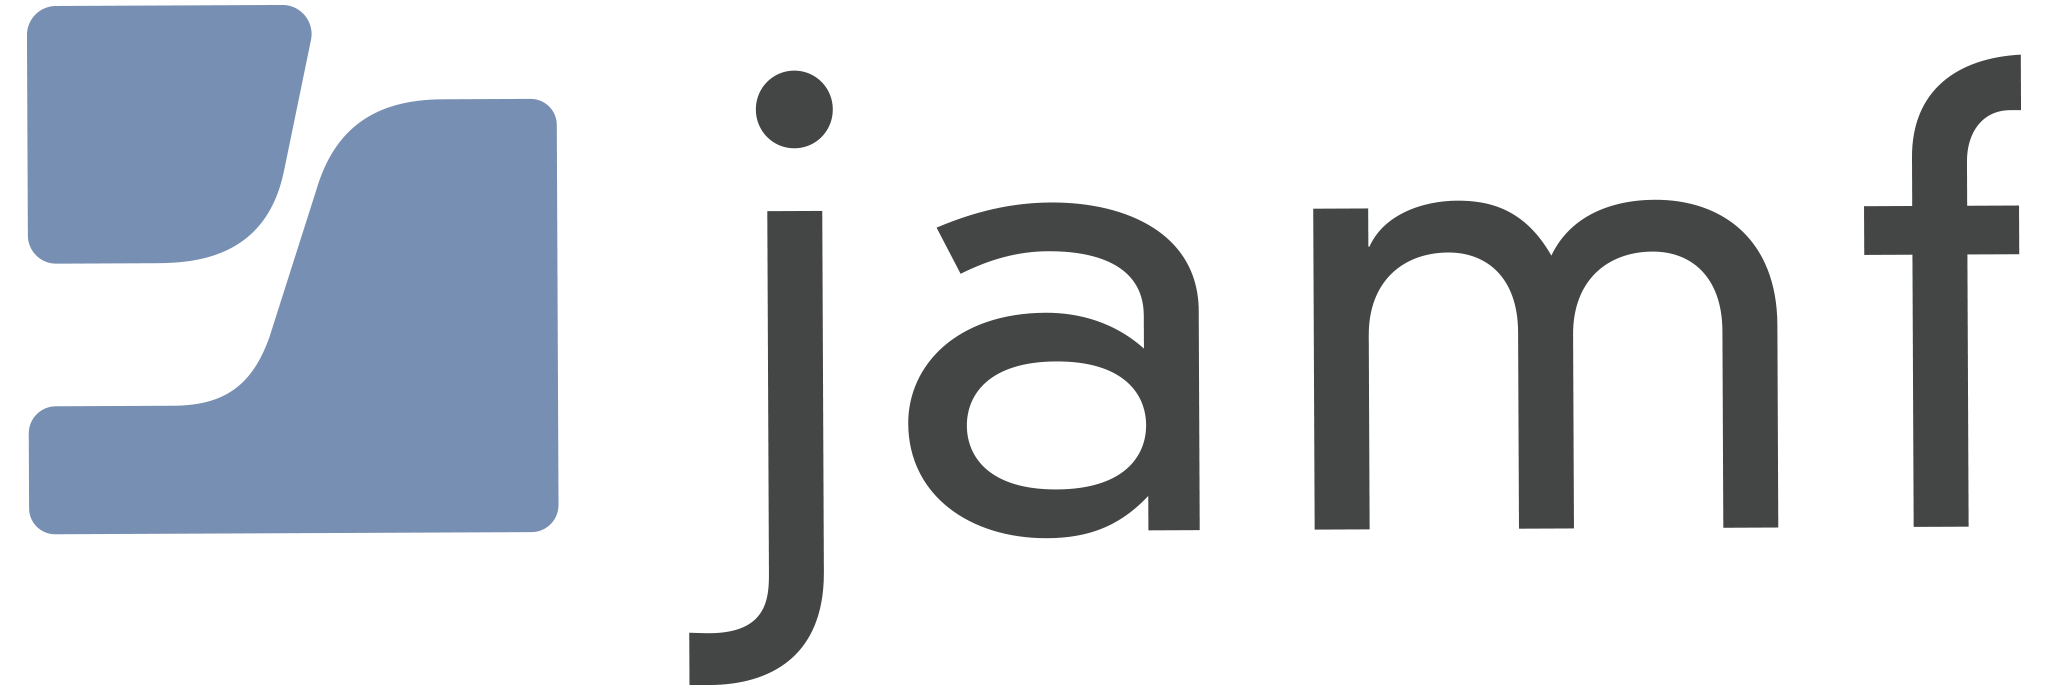 Image logo for Jamf Self Service.